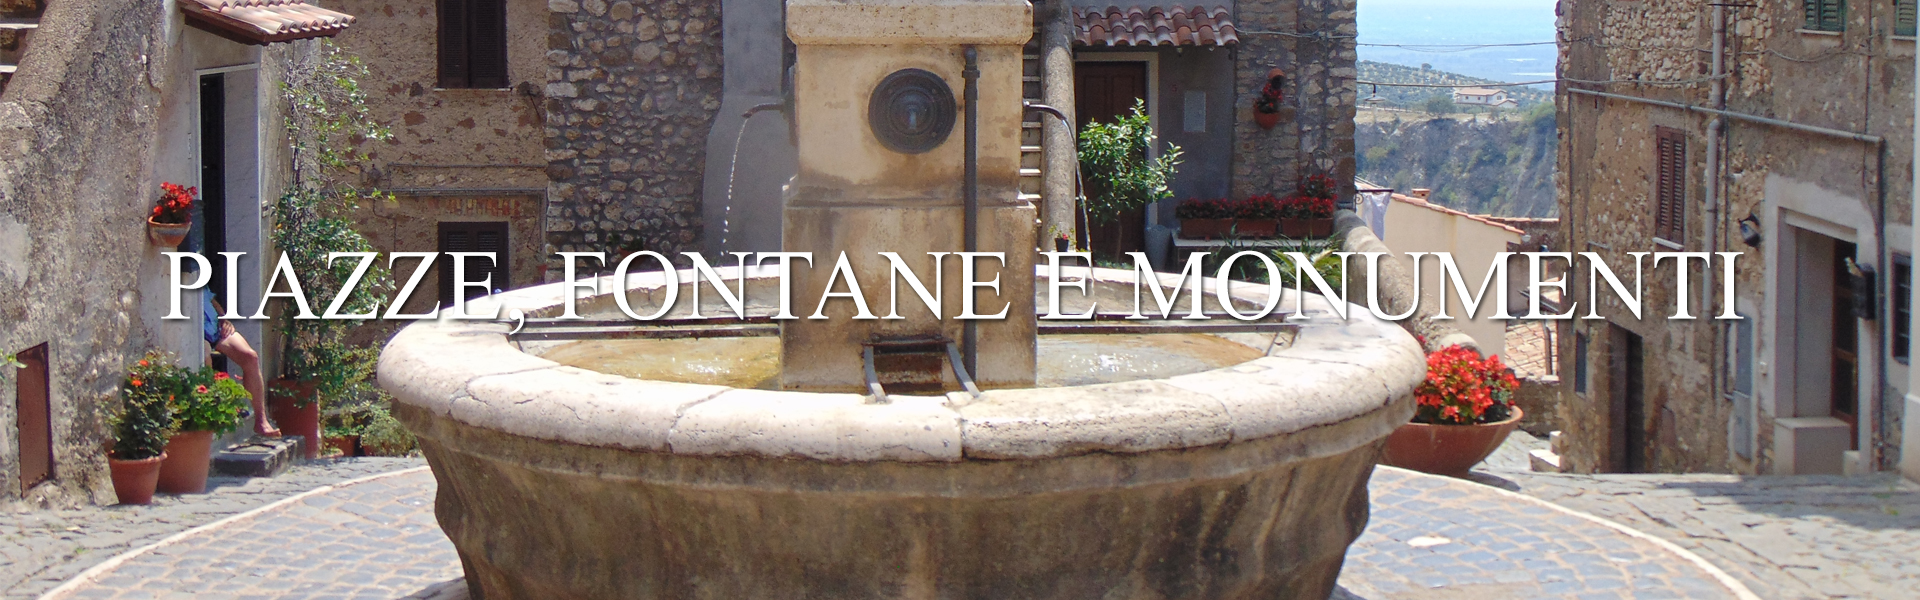 piazze-fontane-monumenti1920x600